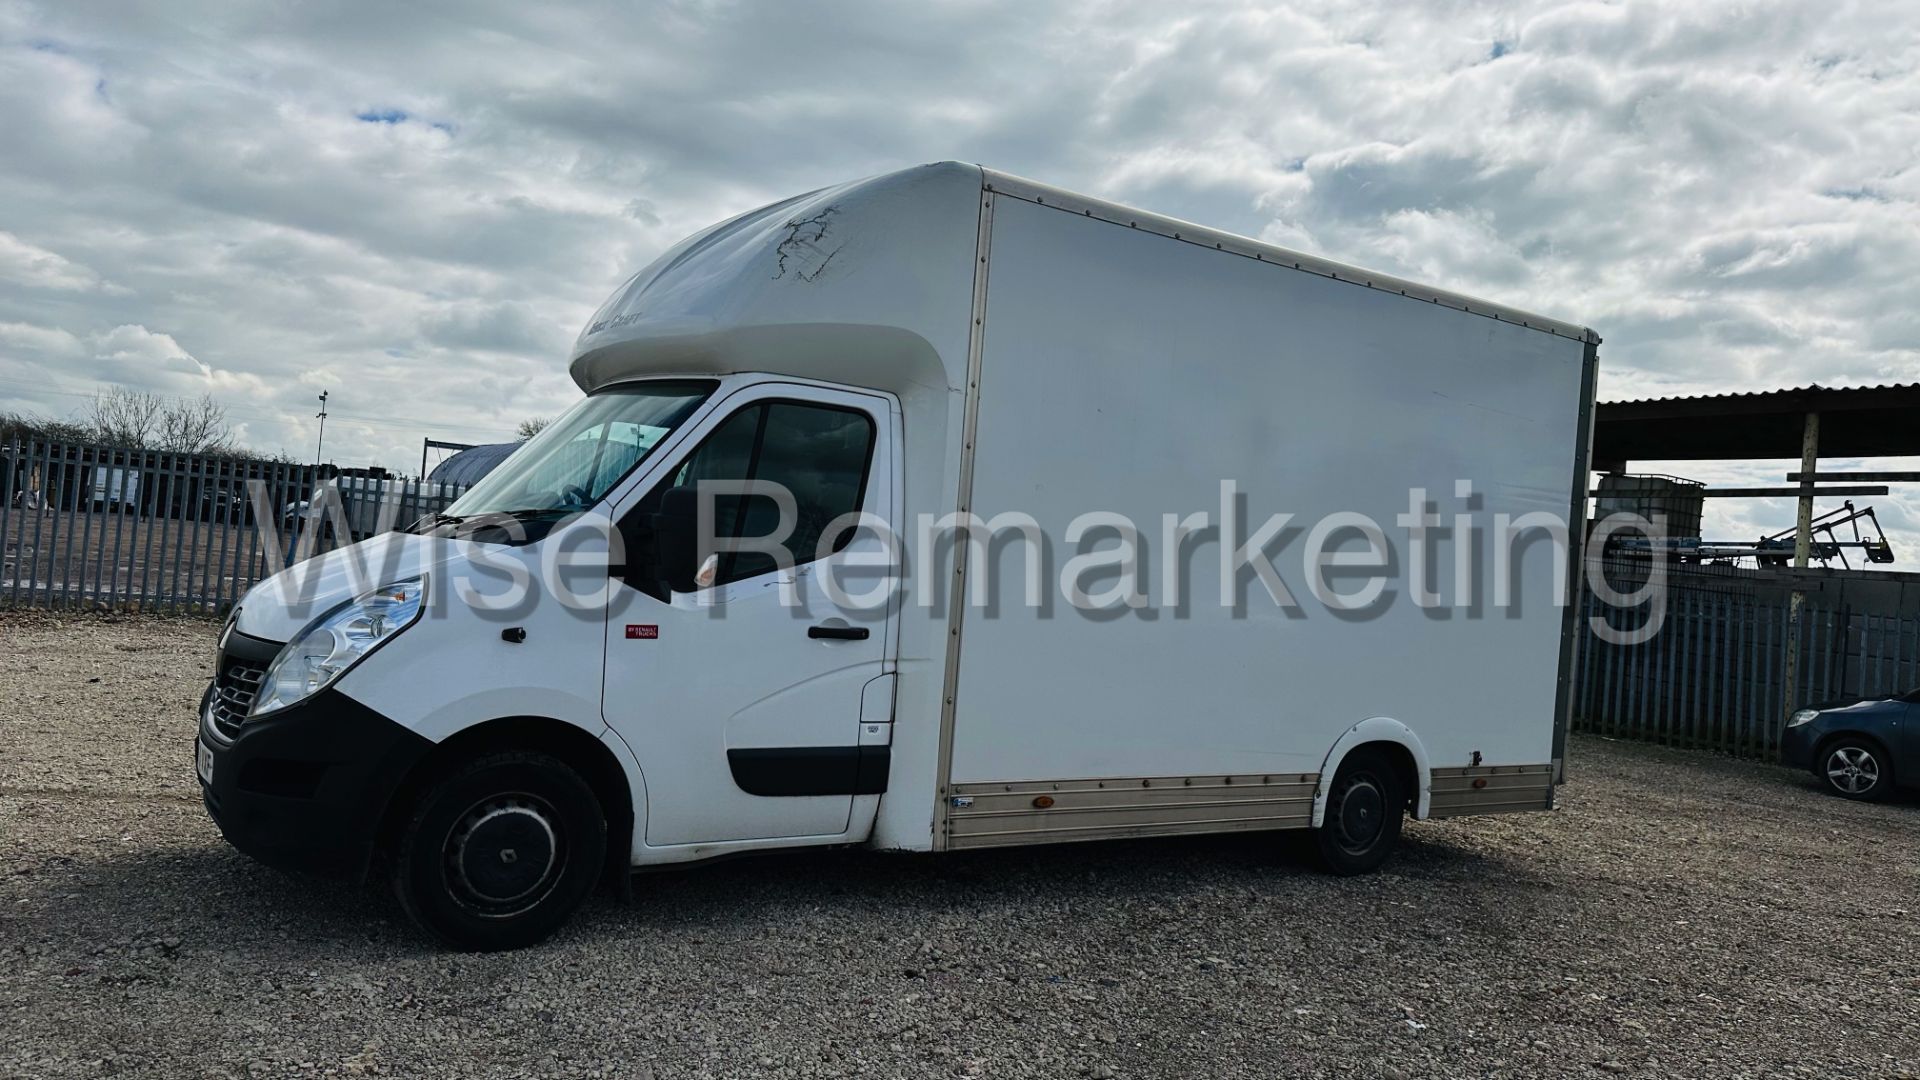 (RESERVE MET)Renault Master LL35 *LWB - LowLoader / Luton Box Van (2019) 6 Speed *Air Con* (Euro 6) - Image 4 of 30